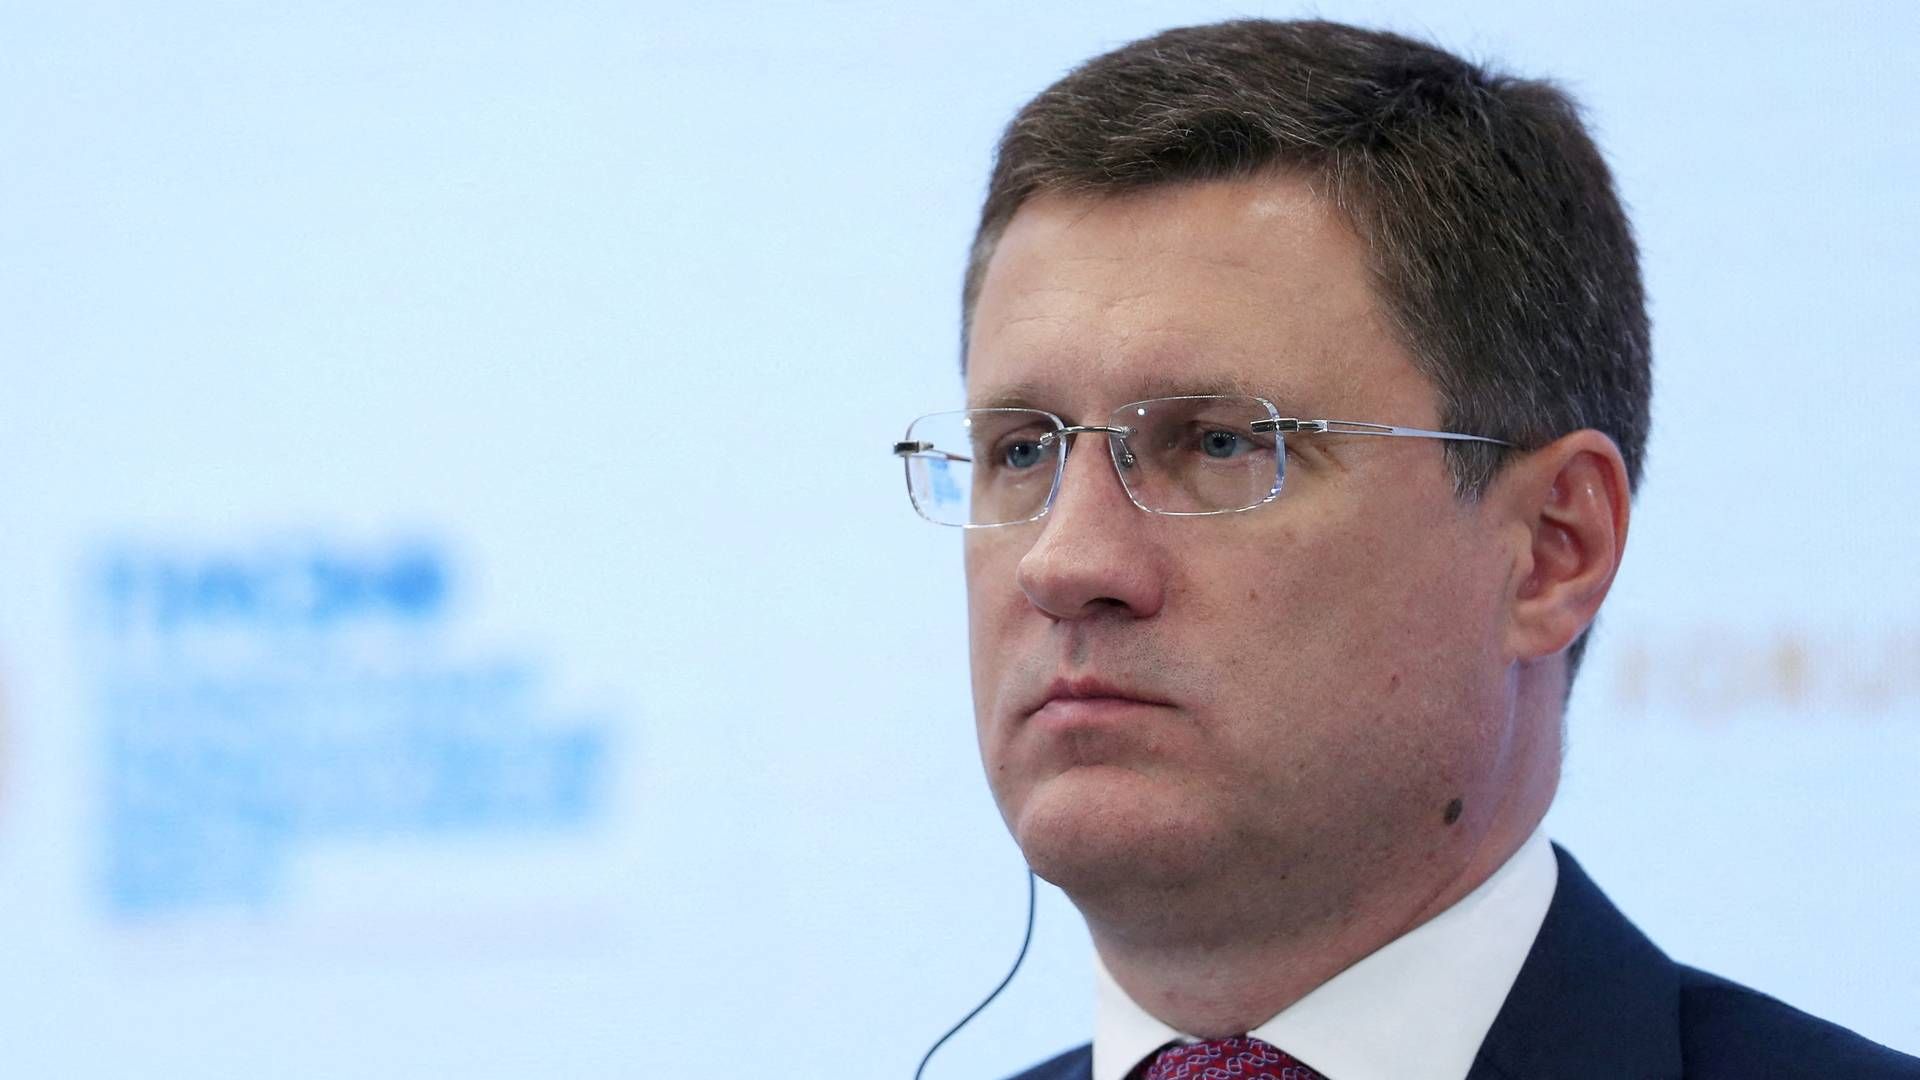 Russian Deputy Prime Minister Alexander Novak tells the Duma Wednesday that banning Russian hydrocarbons would hit global energy markets hard. | Photo: EVGENIA NOVOZHENINA/REUTERS / X90209